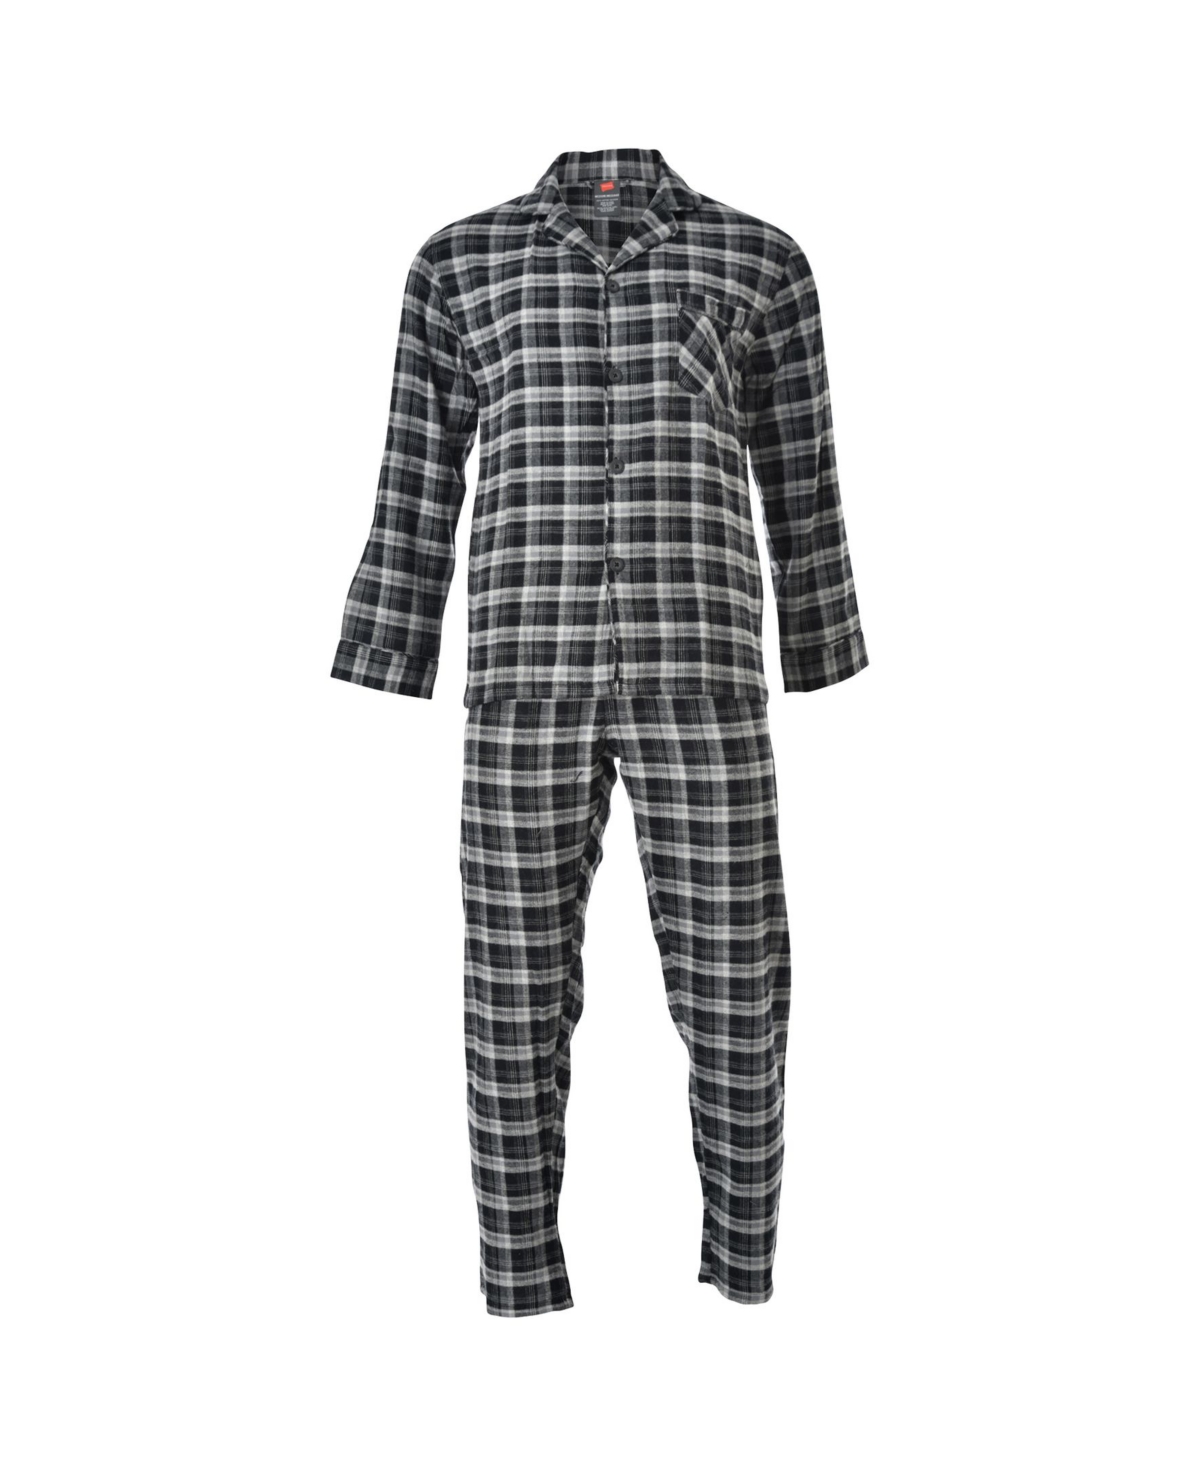 Hanes Men's Flannel Plaid Pajama Set In Black Plaid